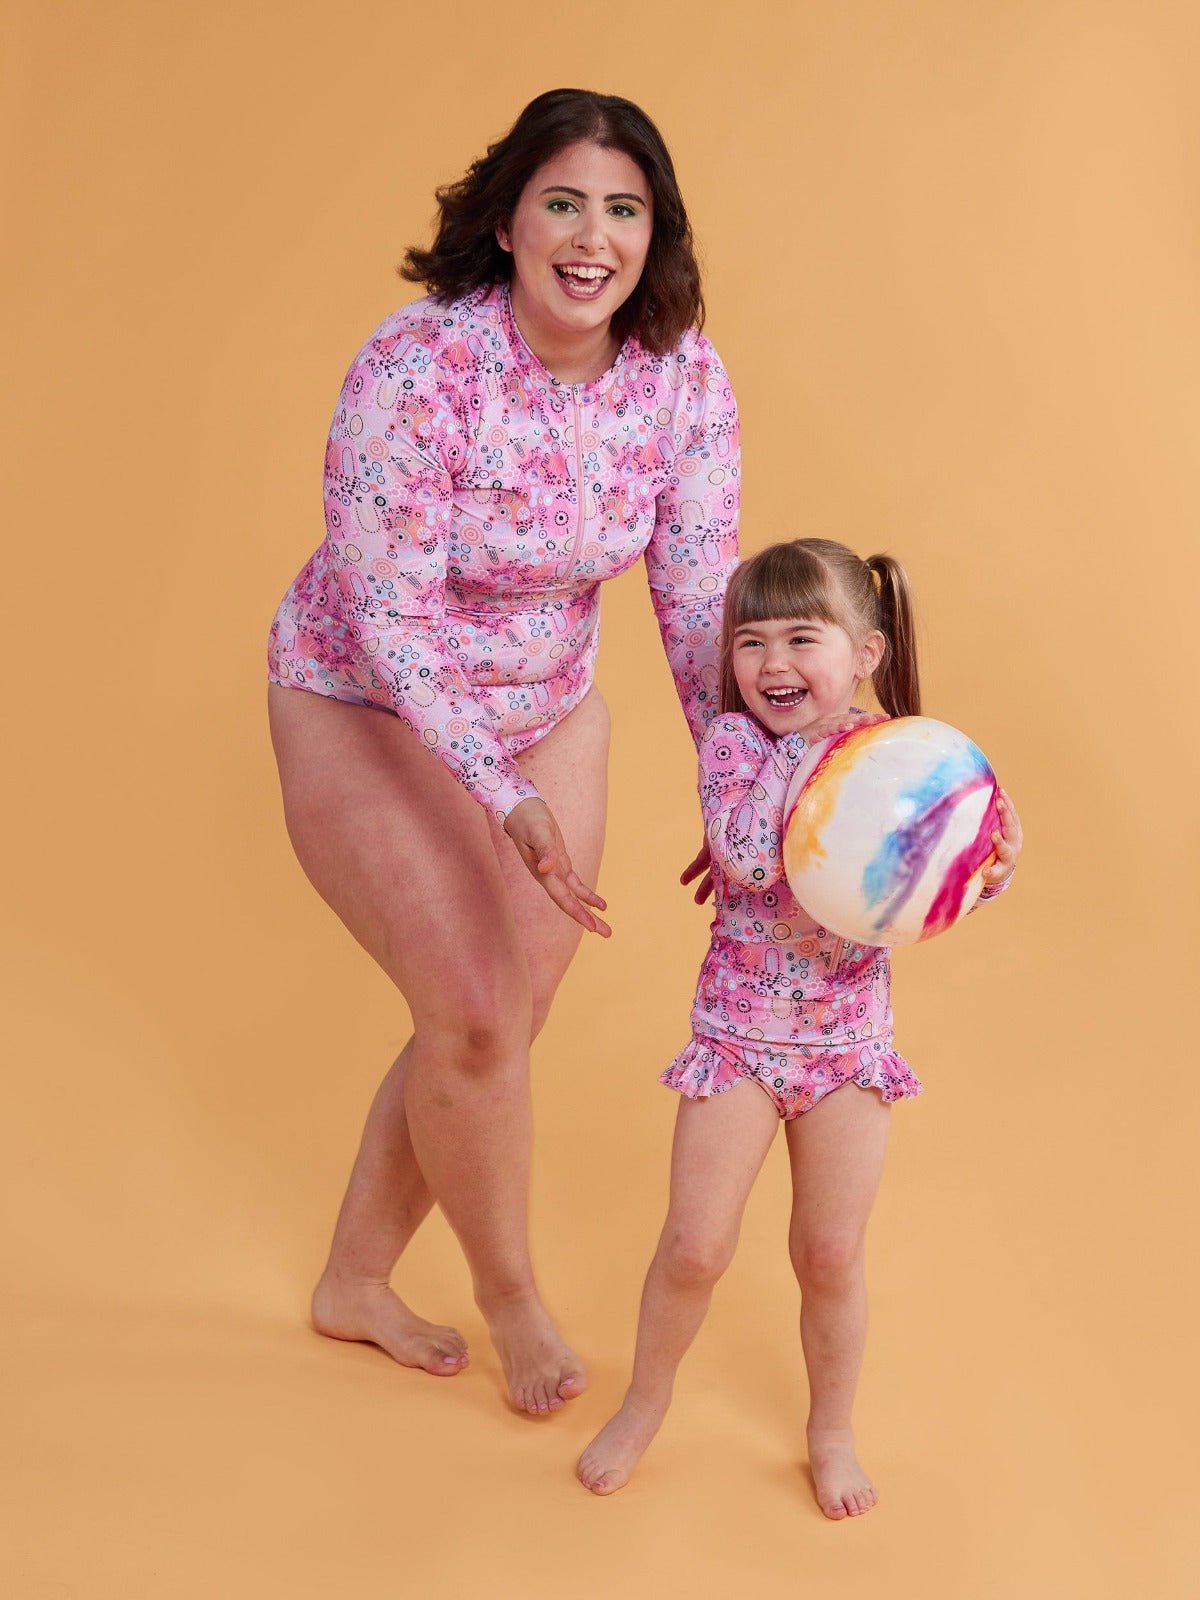 Strong Women Kids Long-Sleeved Swimsuit - plus size matching swimwear with kids